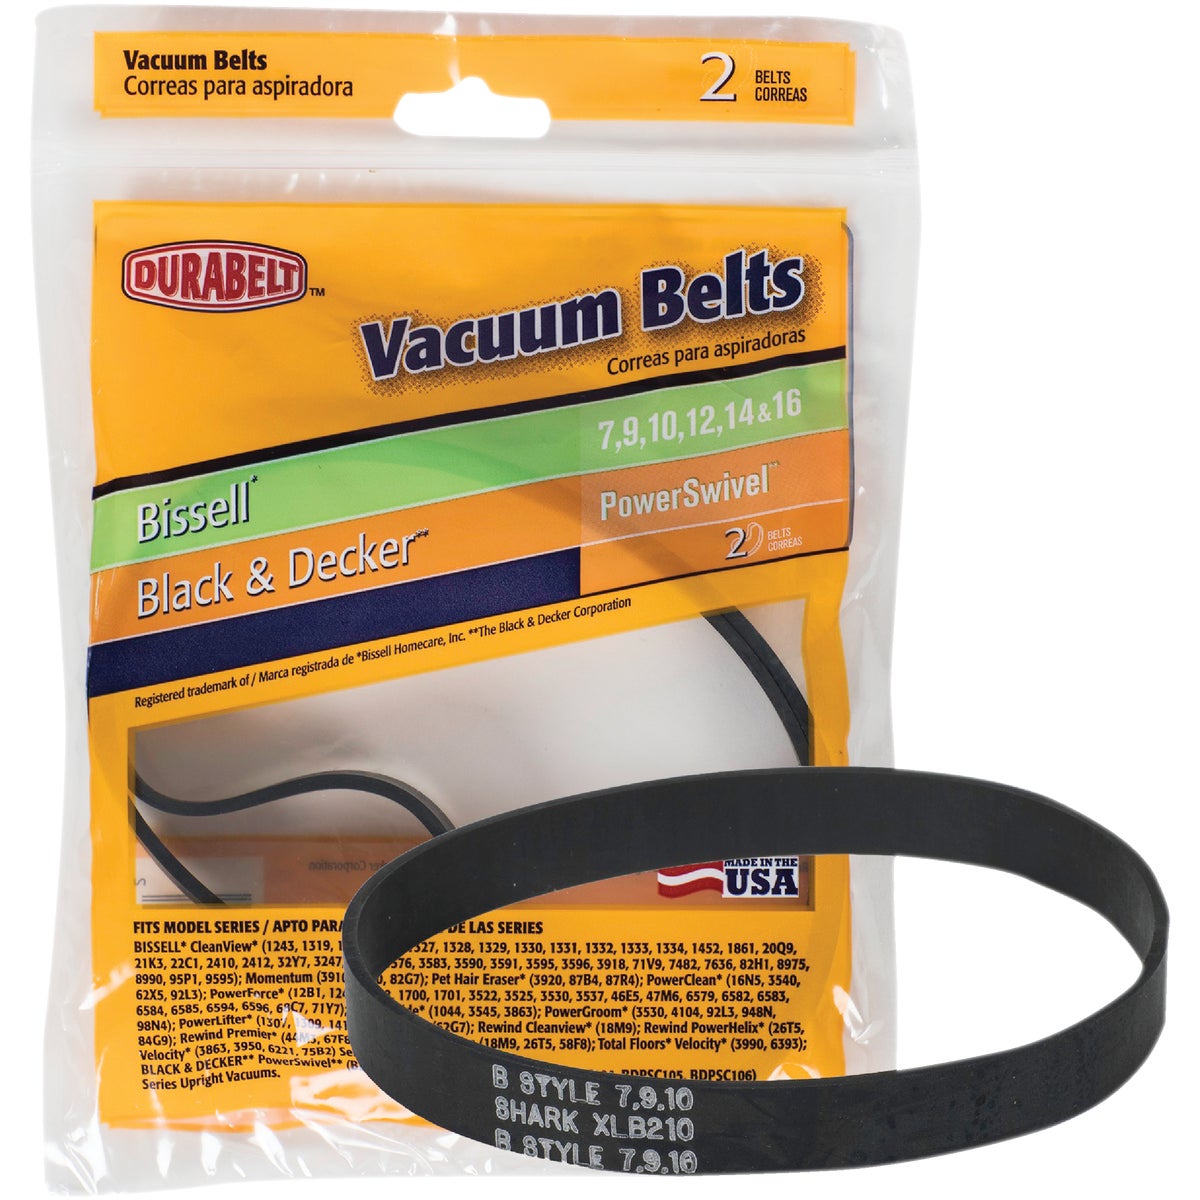 3M Filtrete Bissell 7, 9, 10, 12 & 14 CleanView, Momentum & Pet Hair Eraser Vacuum Belt (2 Pack)